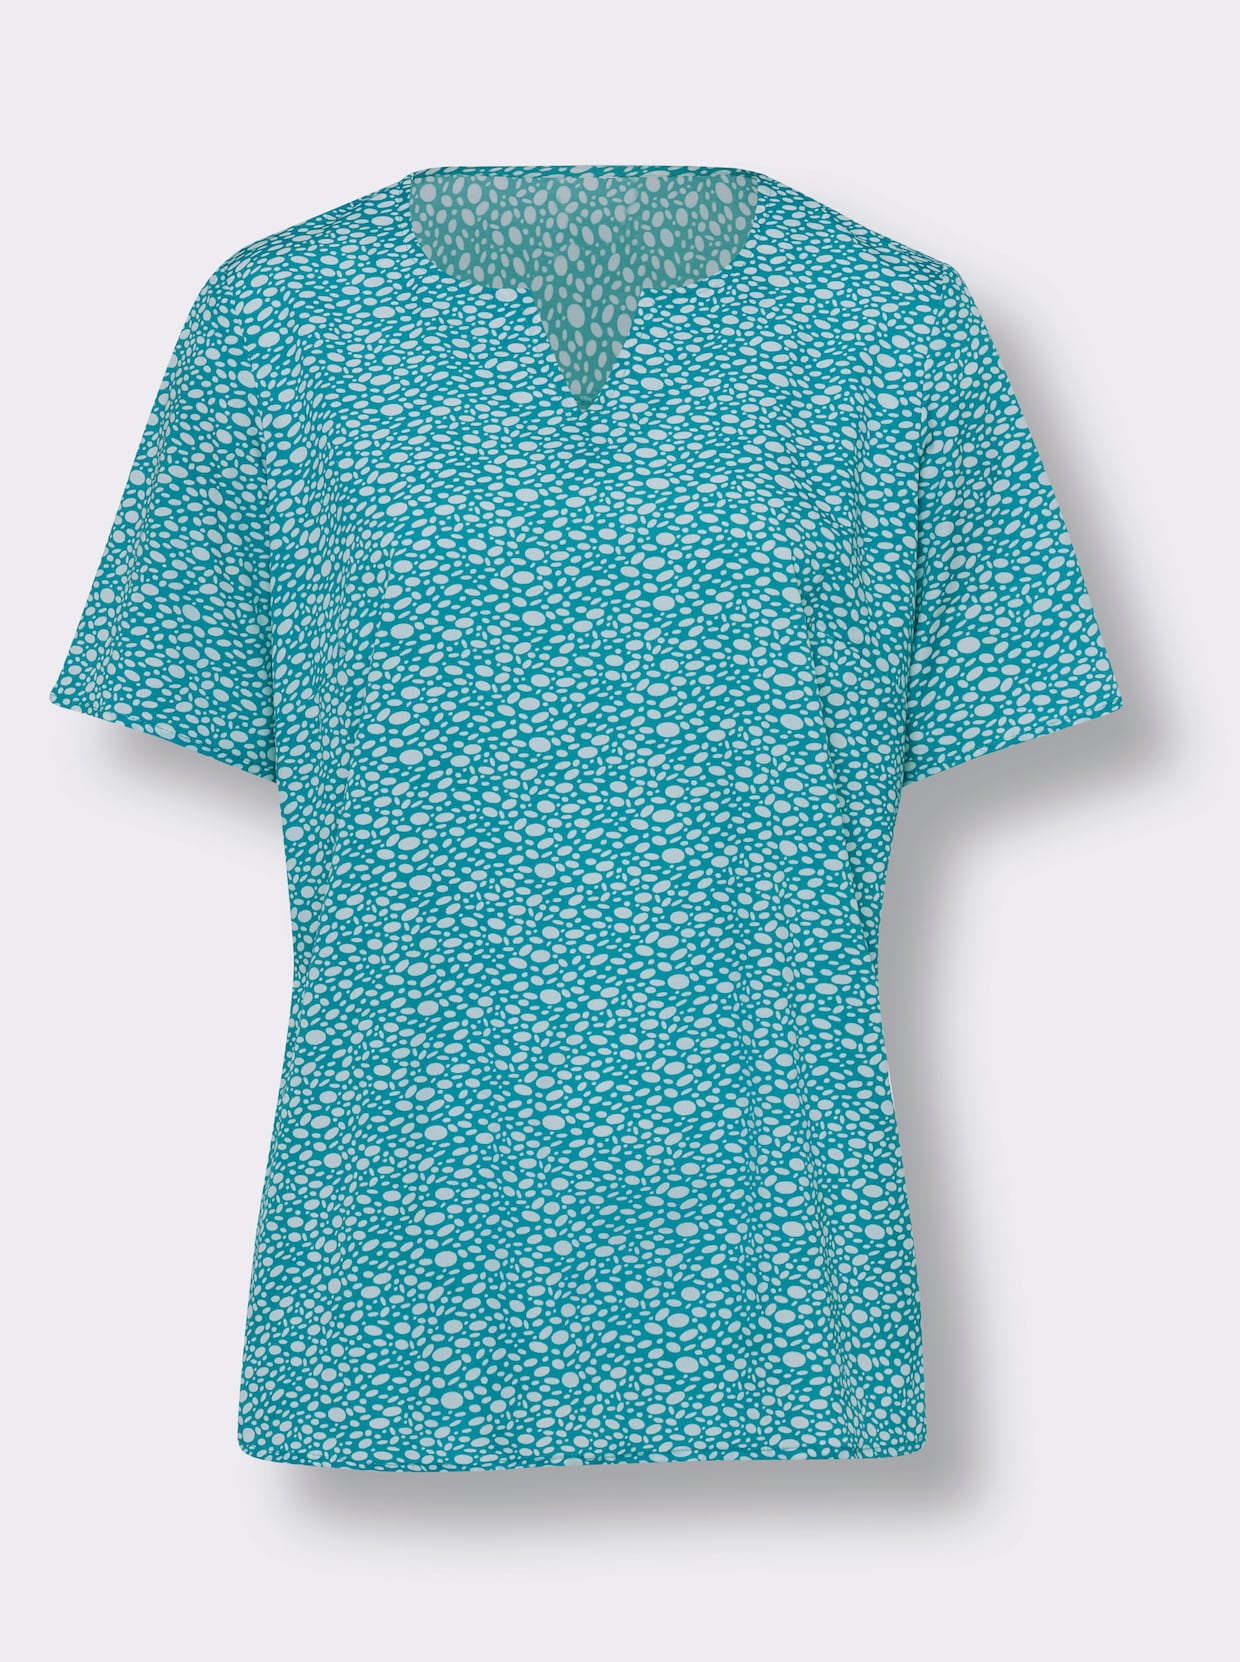 Comfortabele blouse - turquoise/wit bedrukt